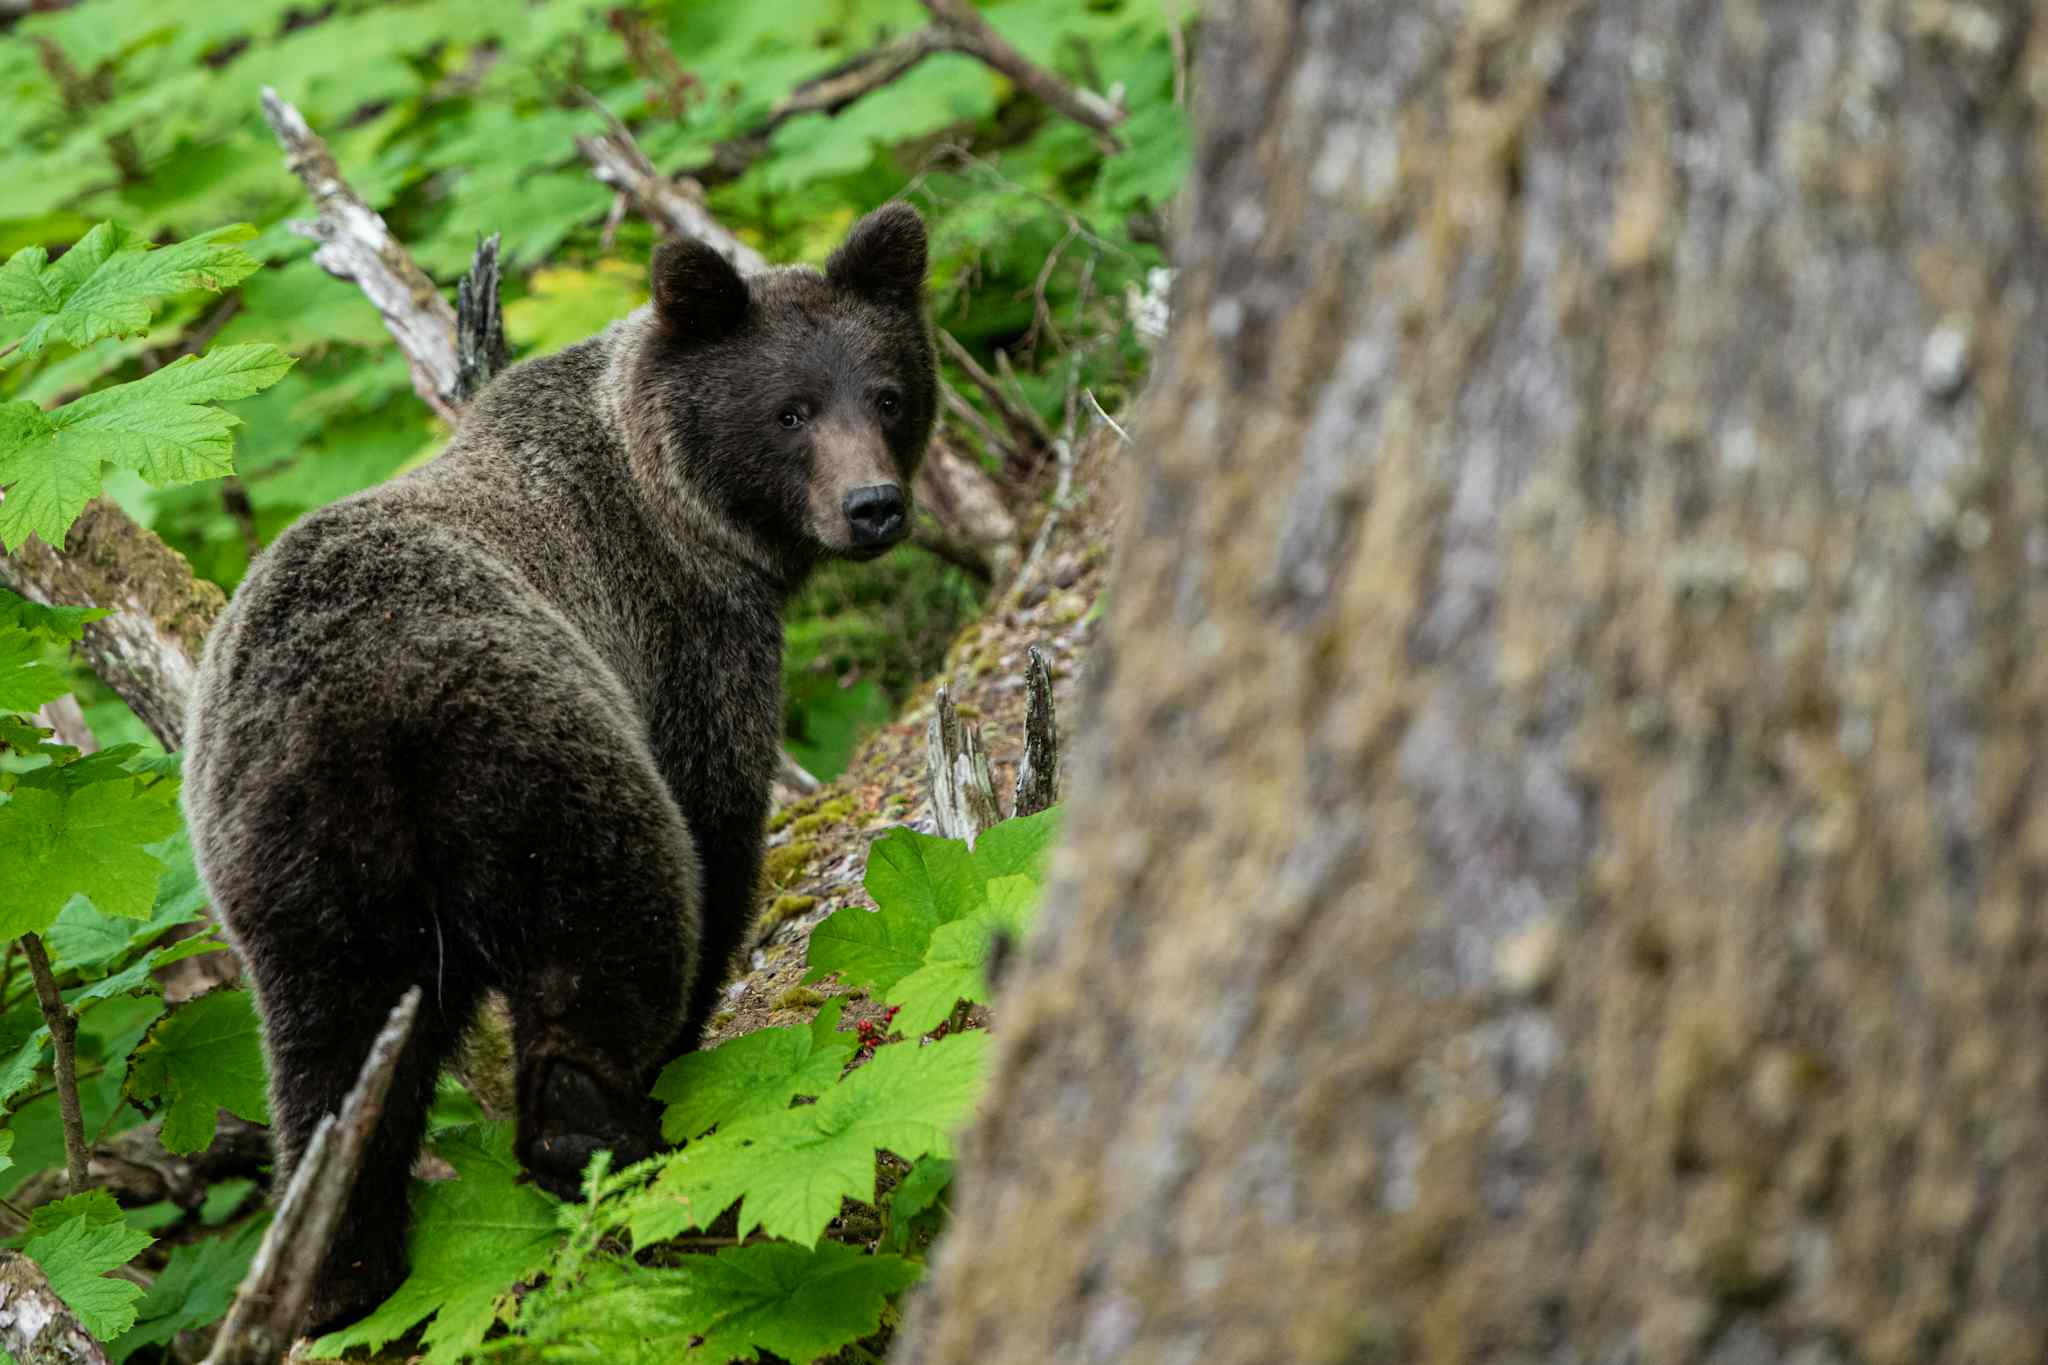 Black bear, Yukon, Canada
Host image: Ruby Range Adventures